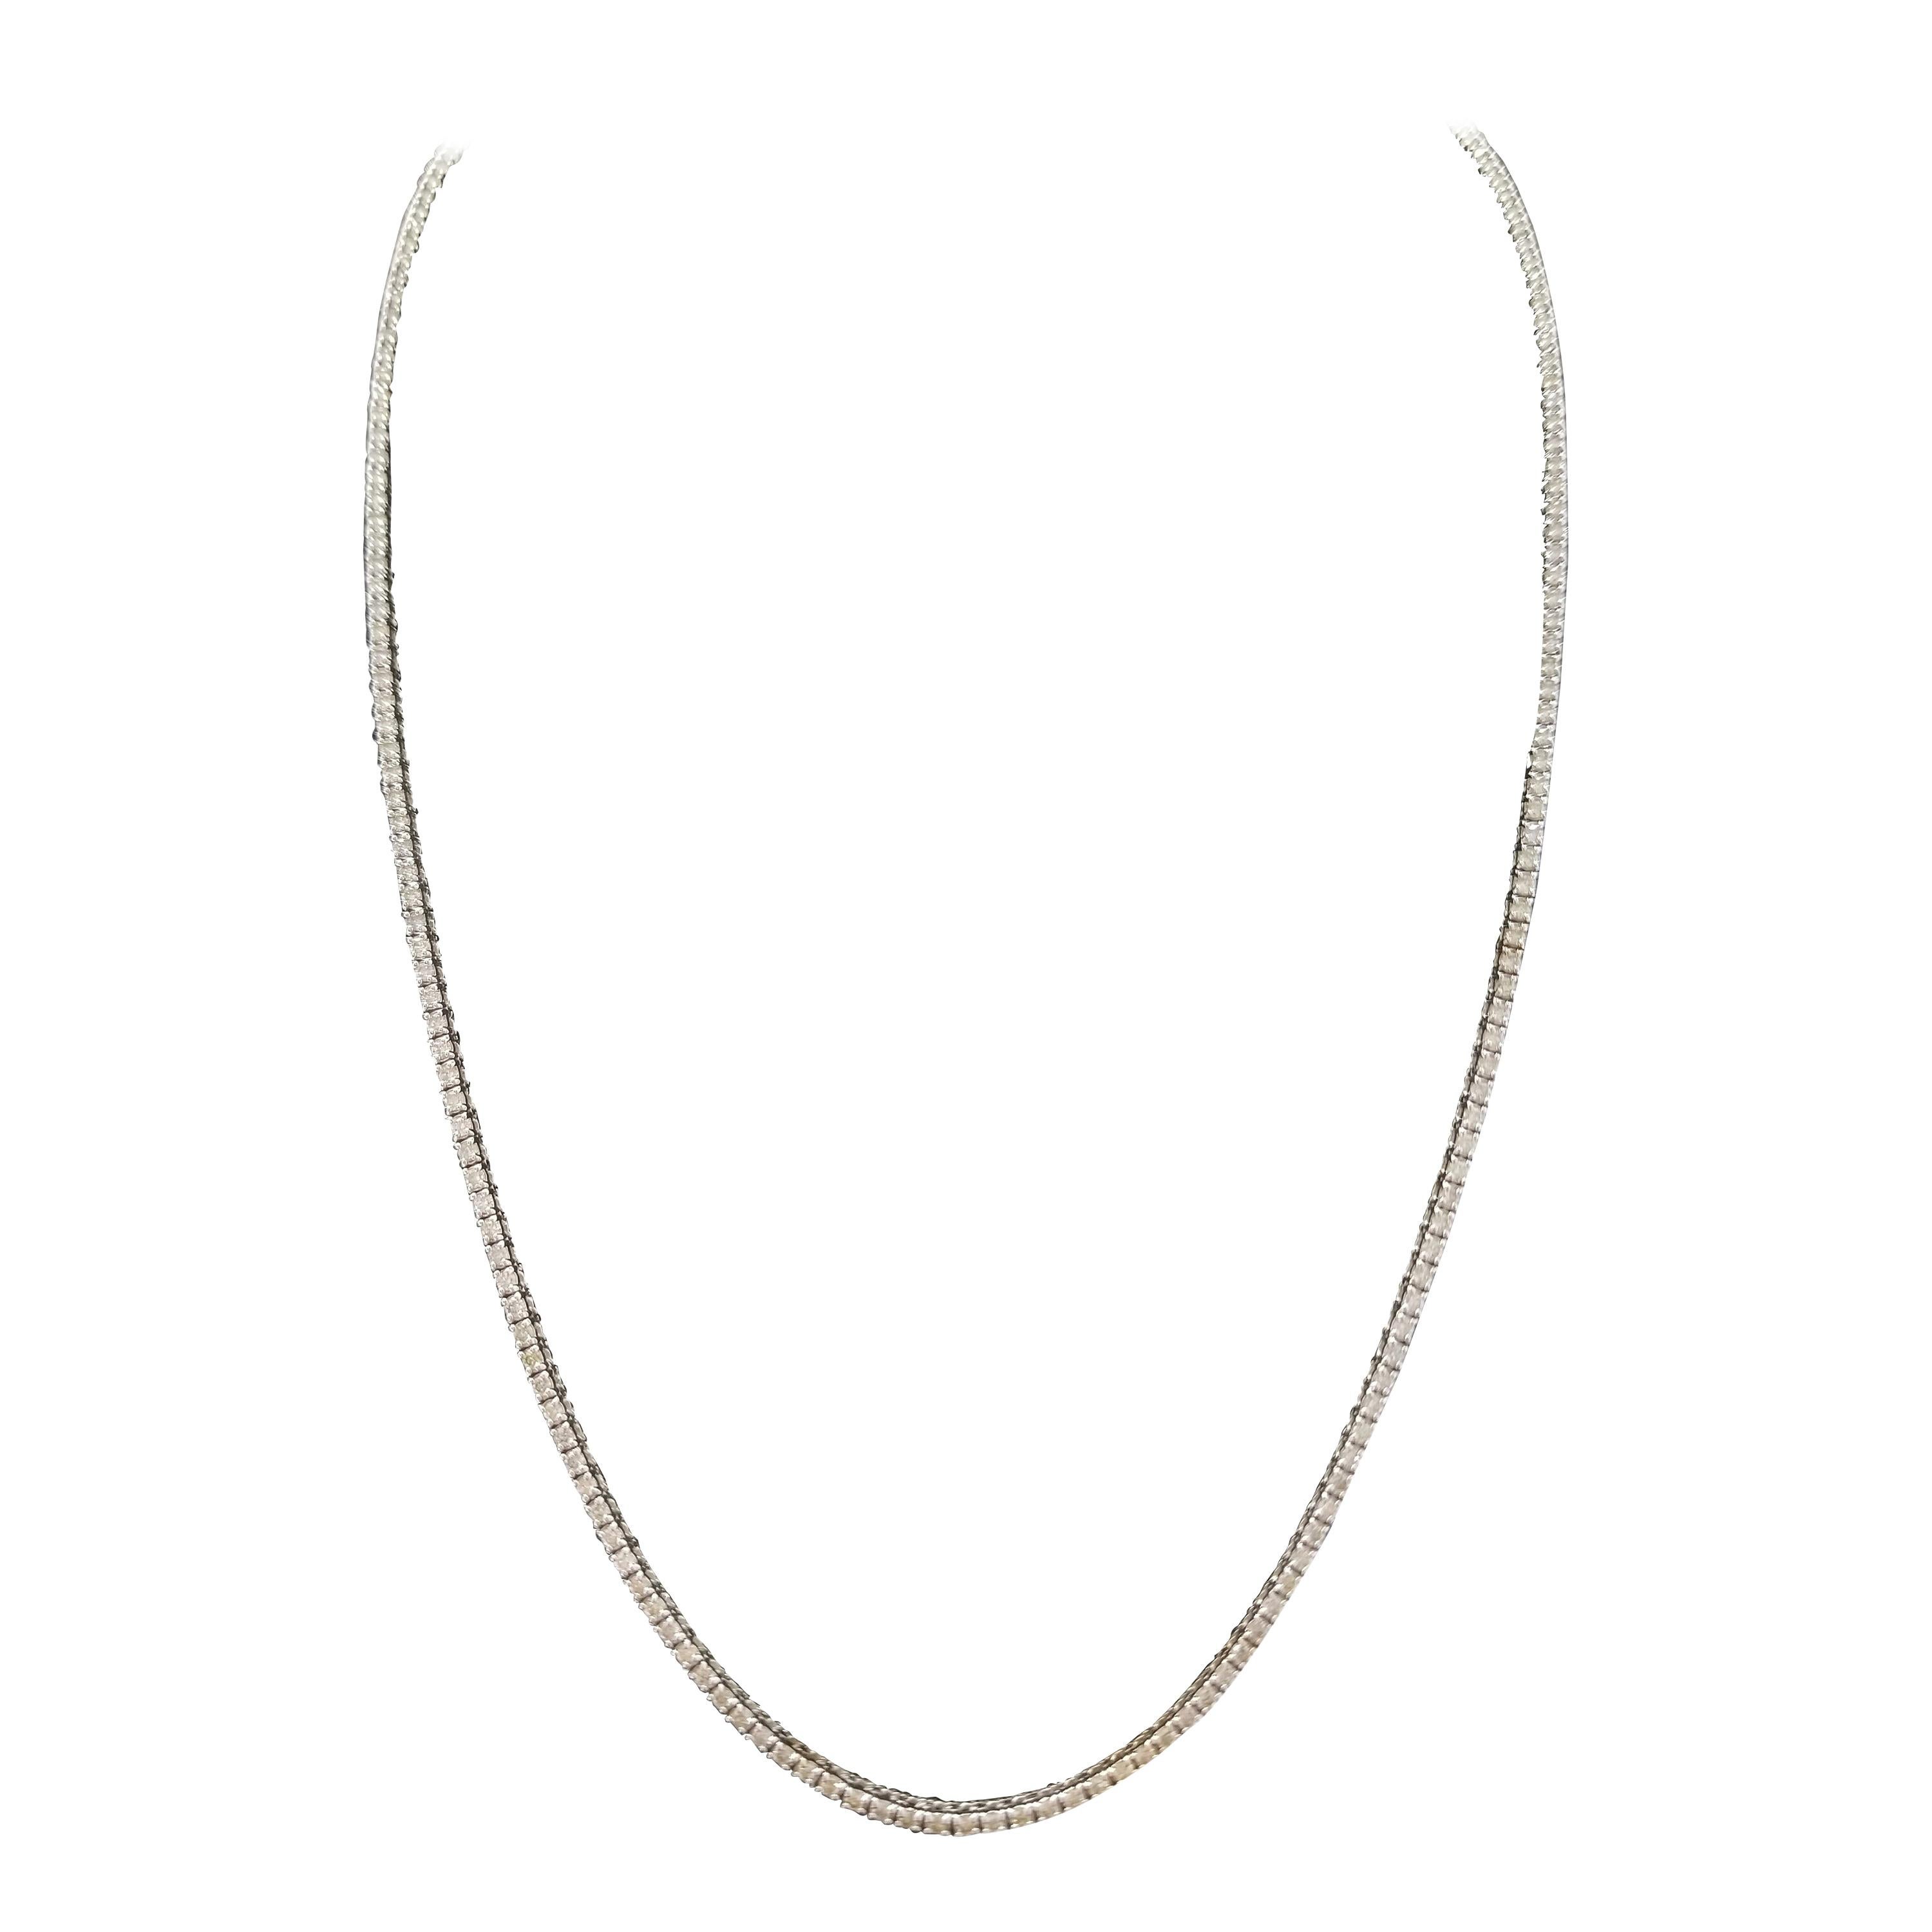 5.31 Carat Round Diamond White Gold Tennis Necklace